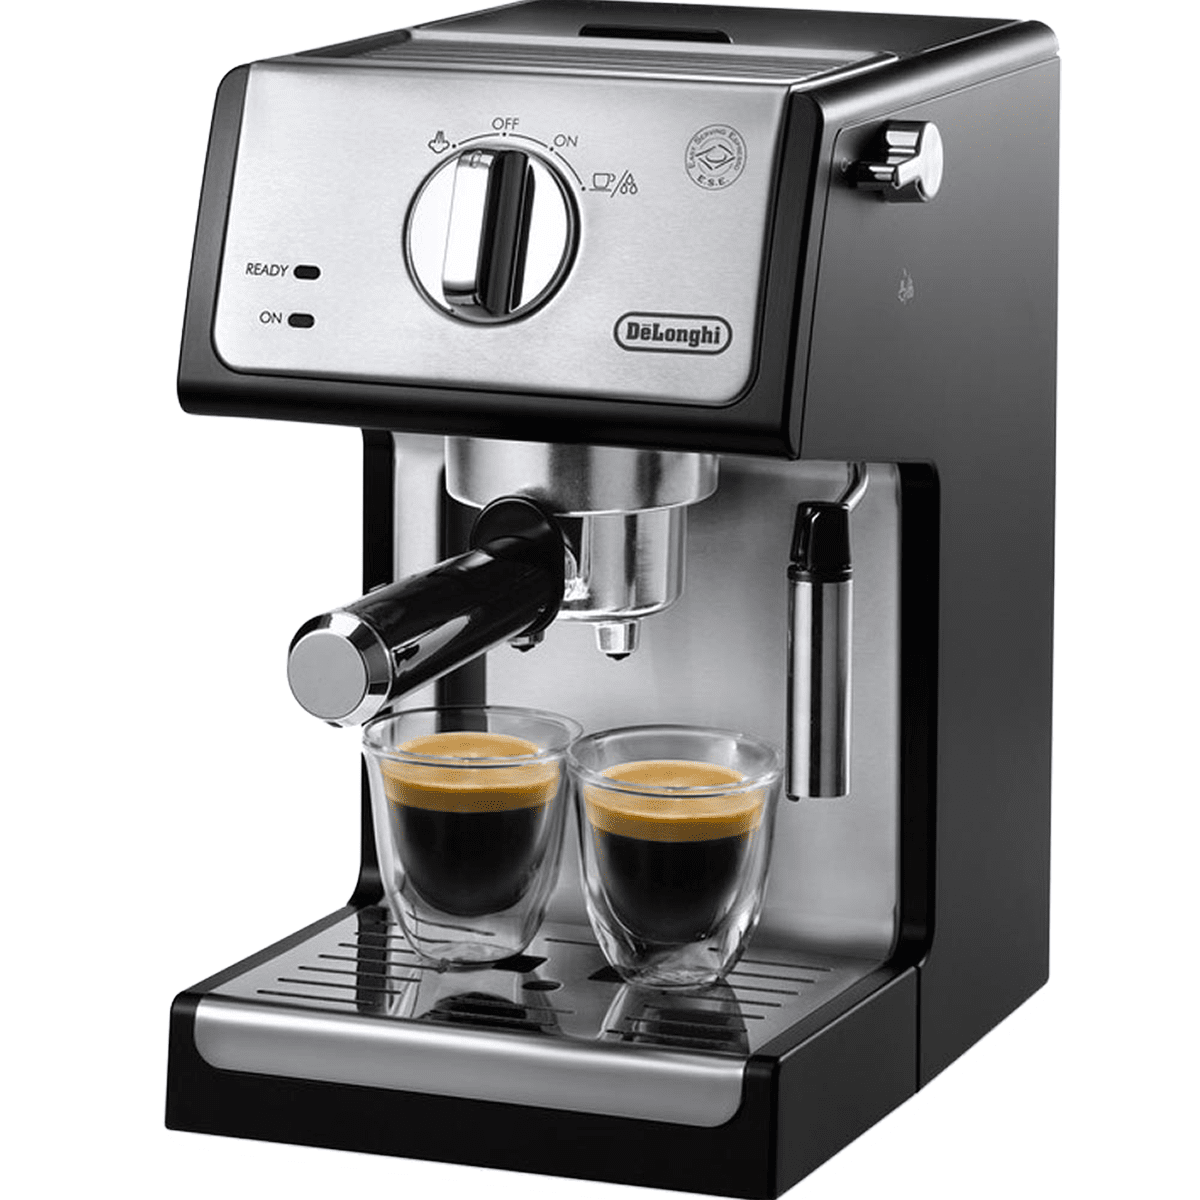 Delonghi Ecp3420 Manual Espresso Machine